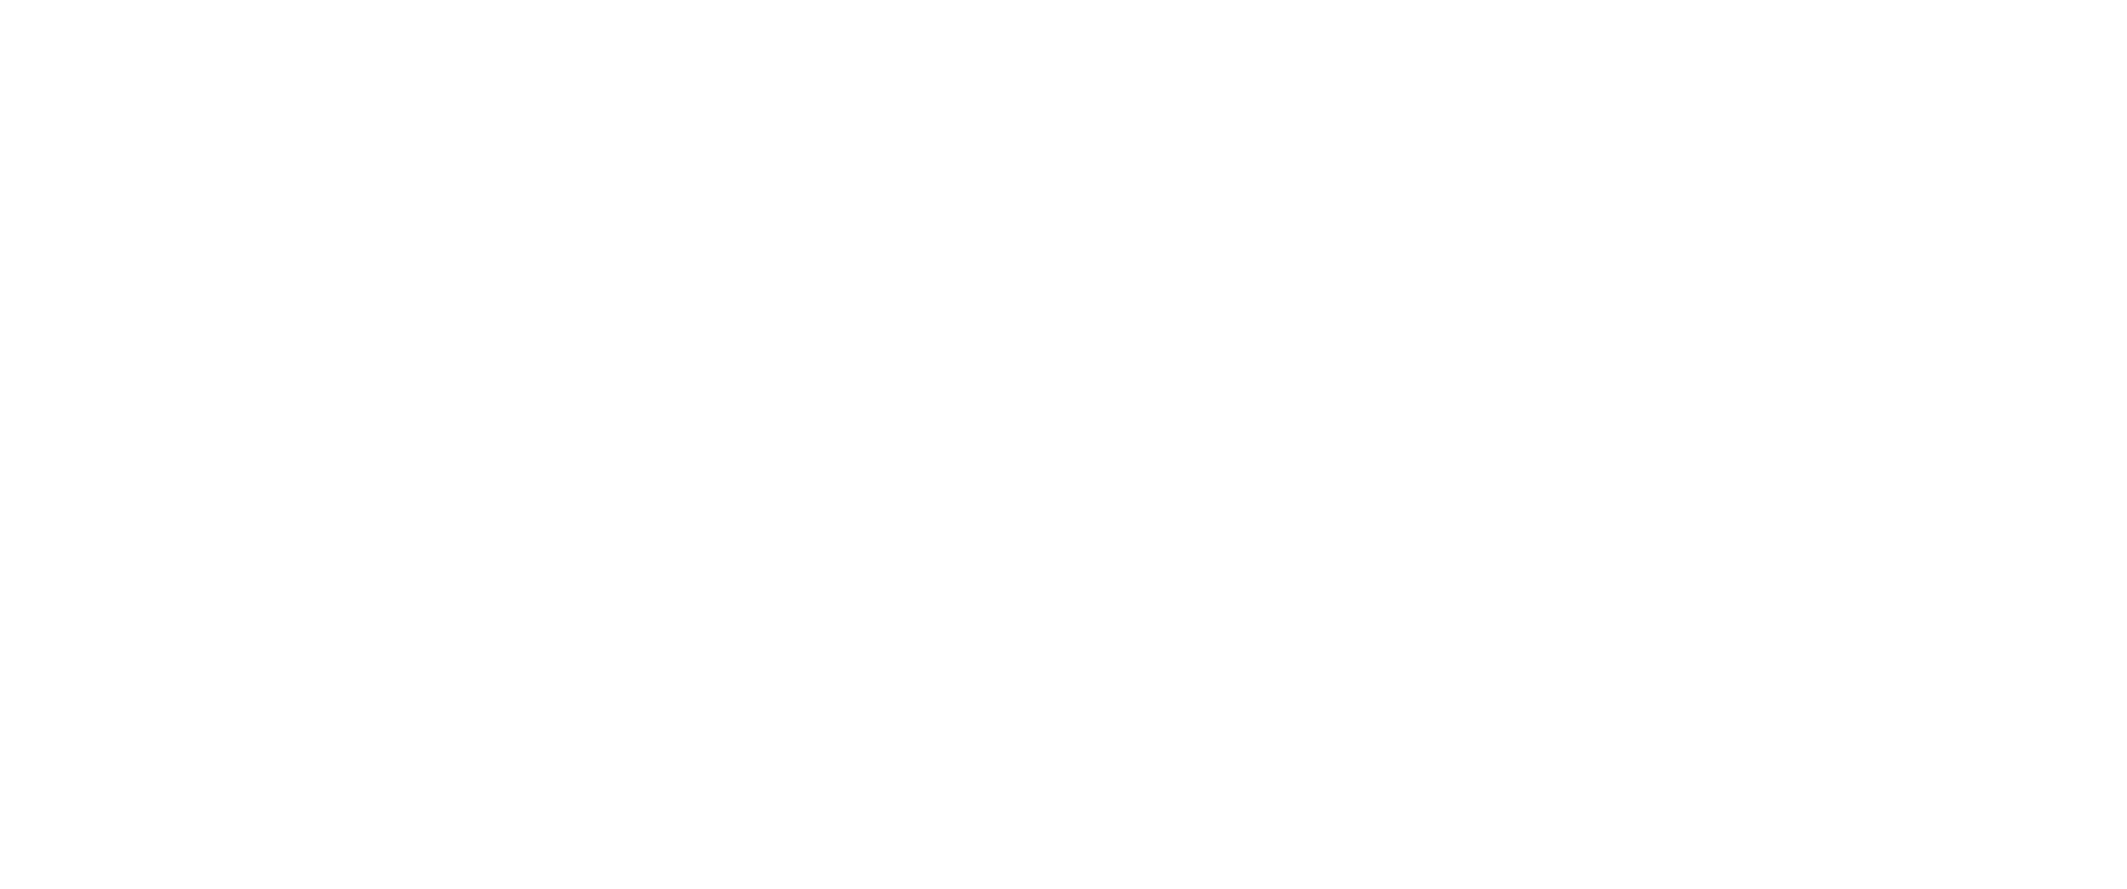 Oolannin logo